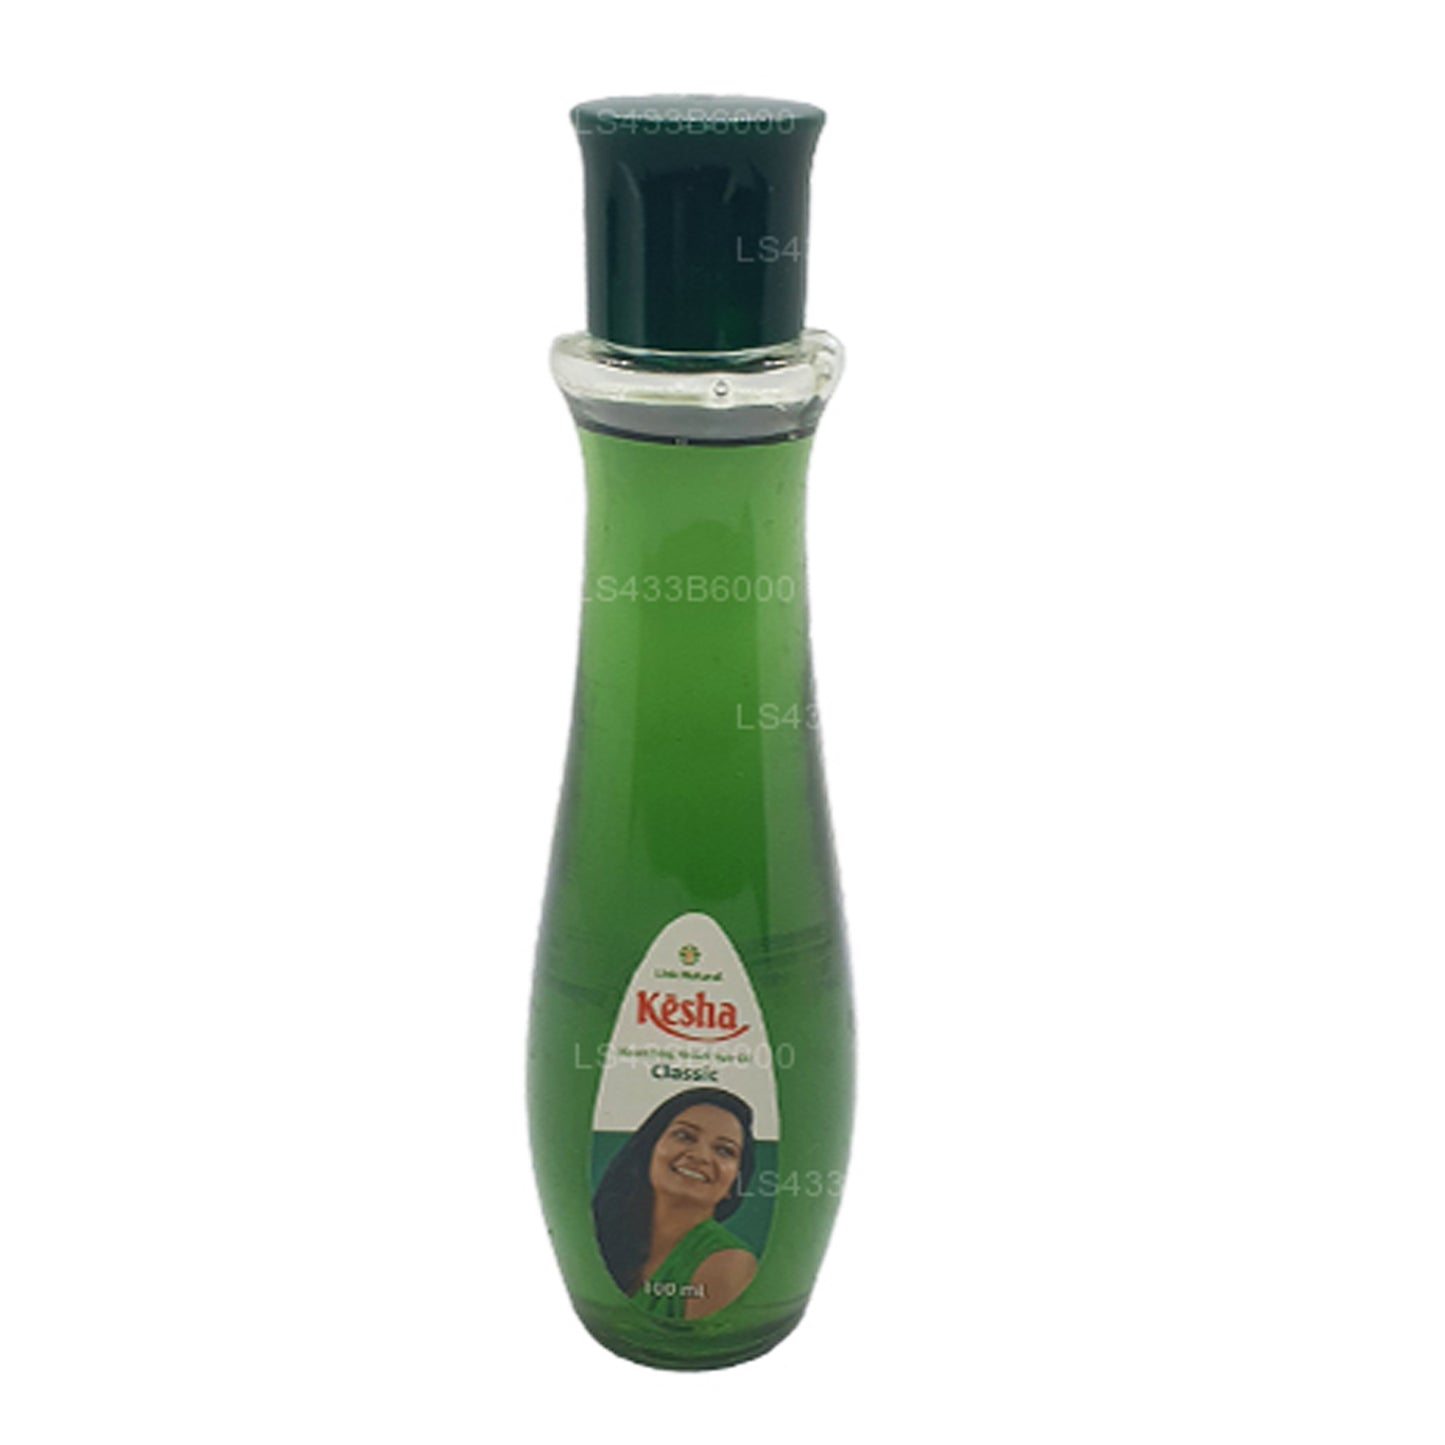 Link Natural Kesha Питательное травяное масло для волос (100 мл)